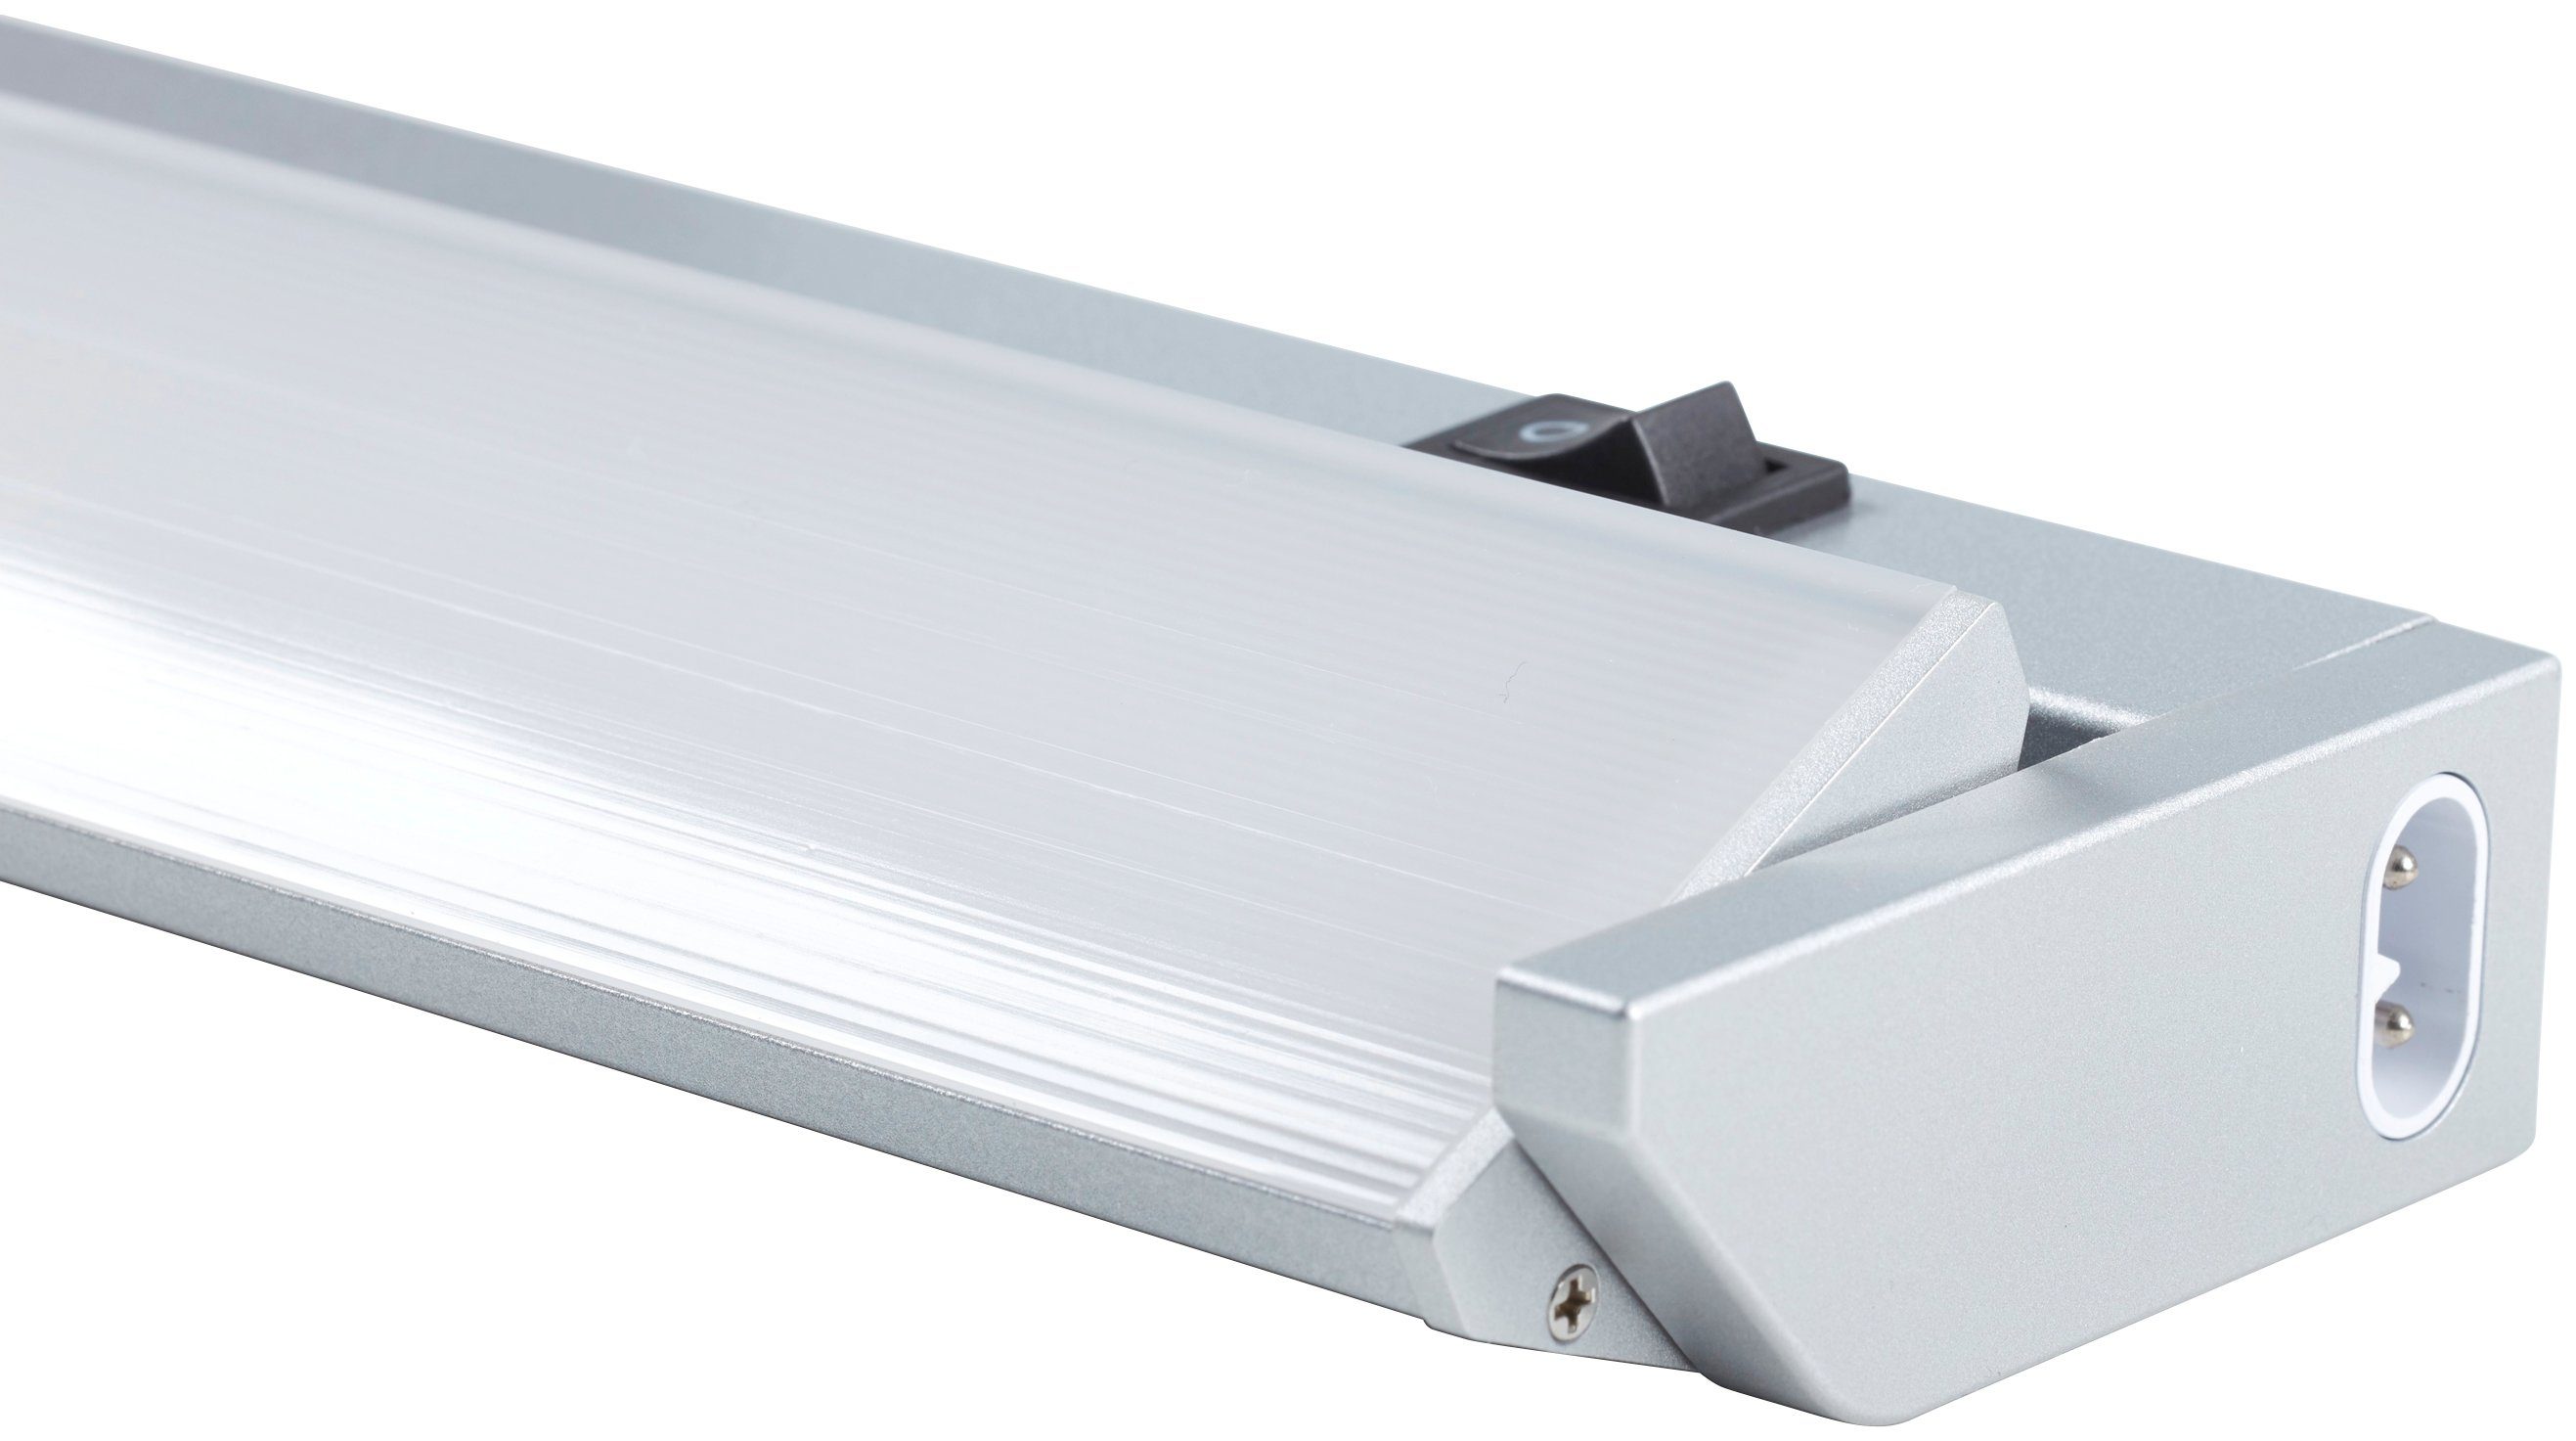 Striplight Loevschall LED Neutralweiß, LED LED 579mm, Lichtausbeute, schwenkbar Unterbauleuchte fest integriert, Hohe Ein-/Ausschalter,